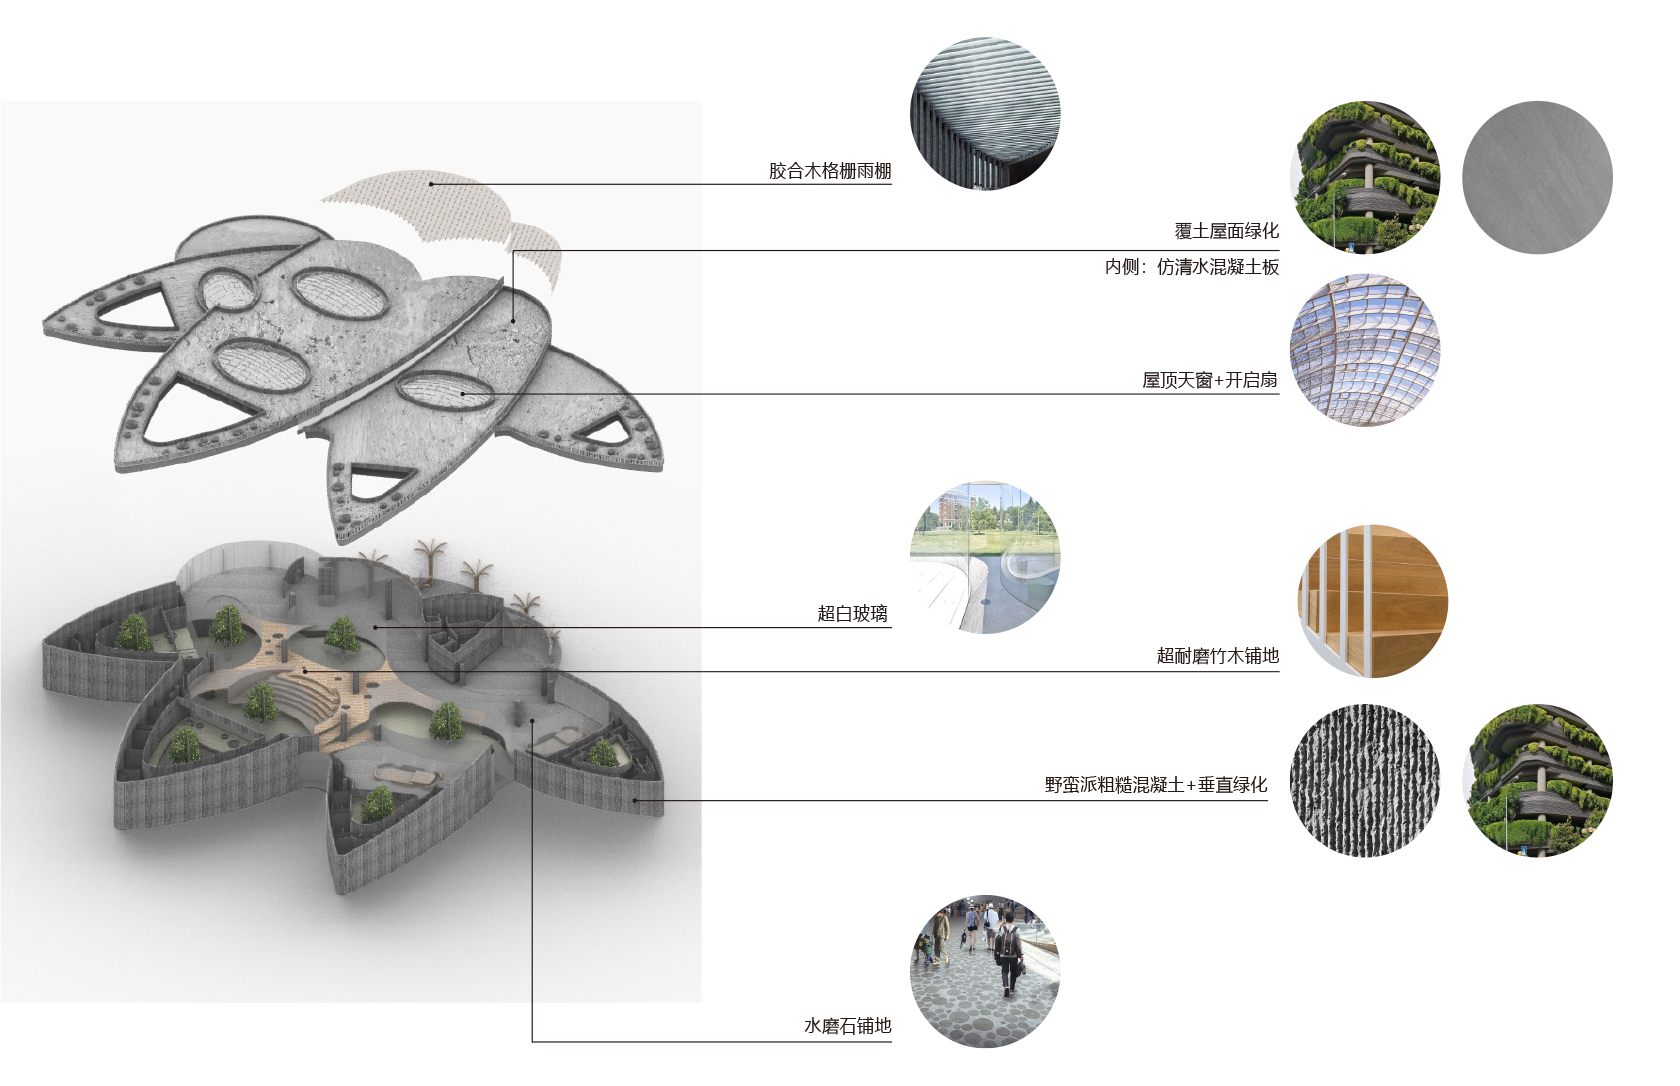 04. 大熊猫基地星星产房_材料分析 Panda Base Delivery House Architecture Materials.jpg